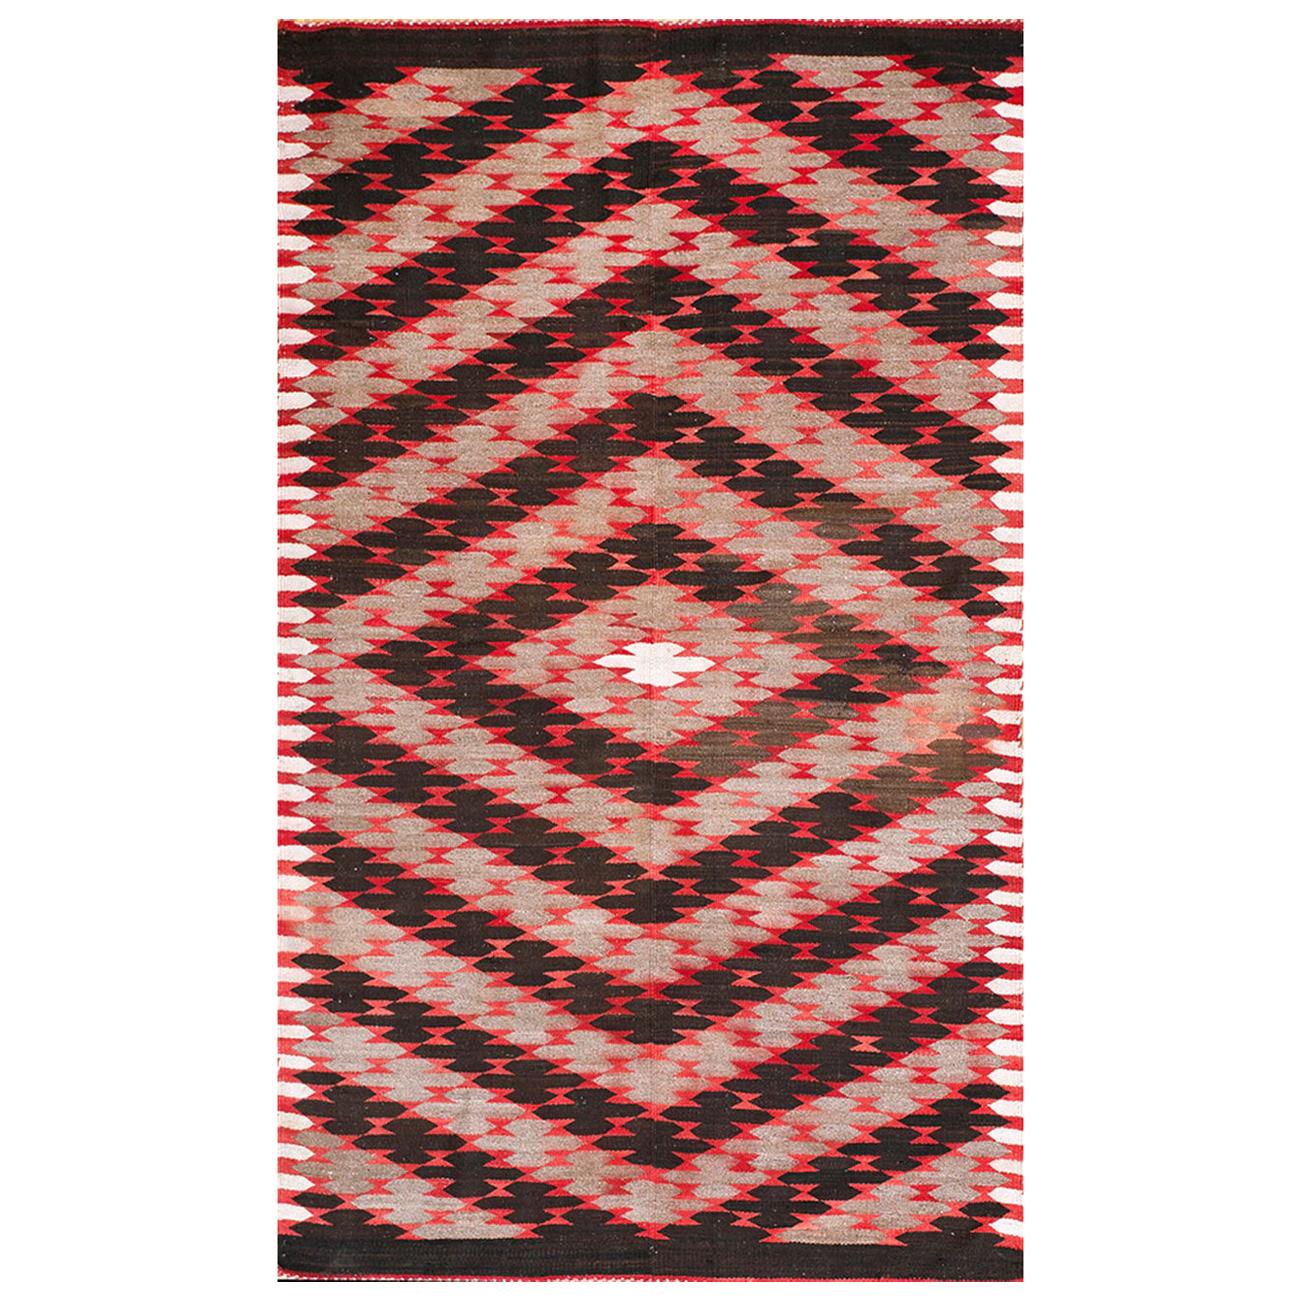 Early 20th Century Navajo Rio Grande Carpet ( 4'6" x 7'8" - 137 x 234 )